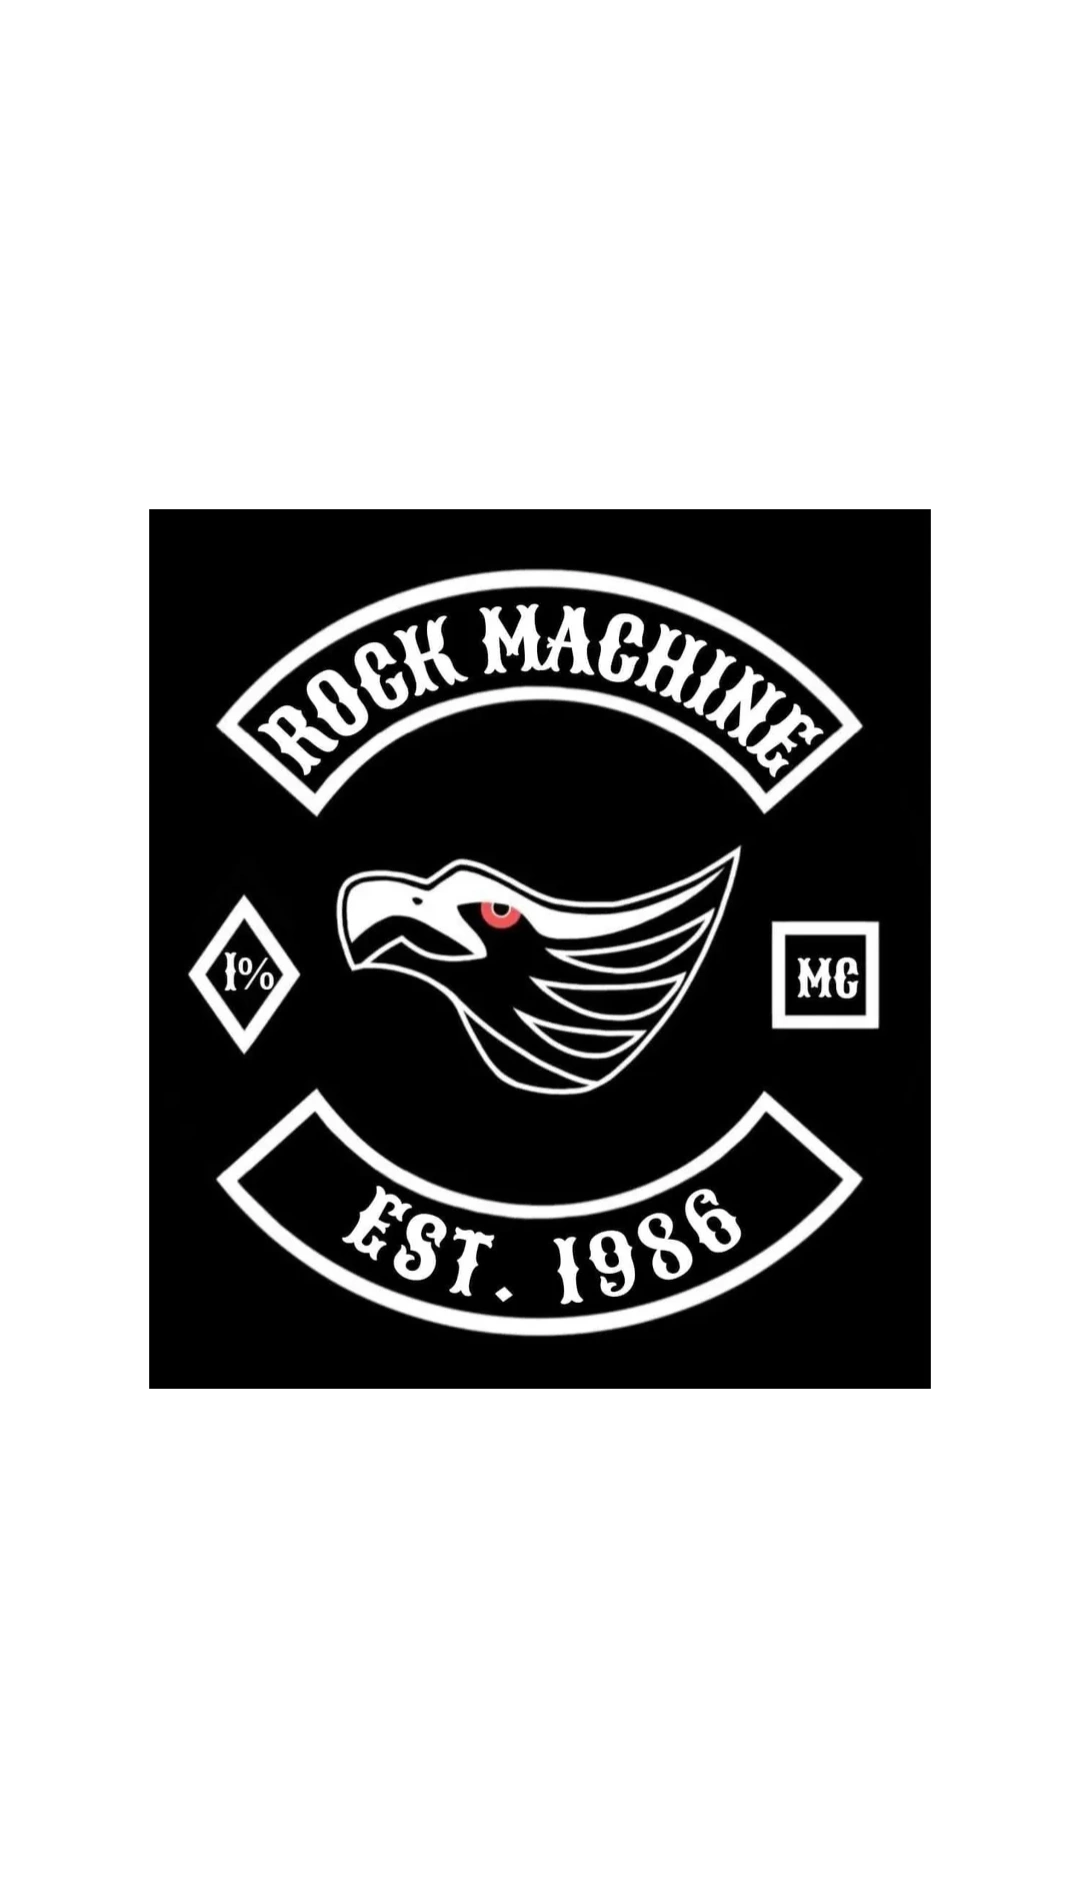 Rock Machine MC patch set